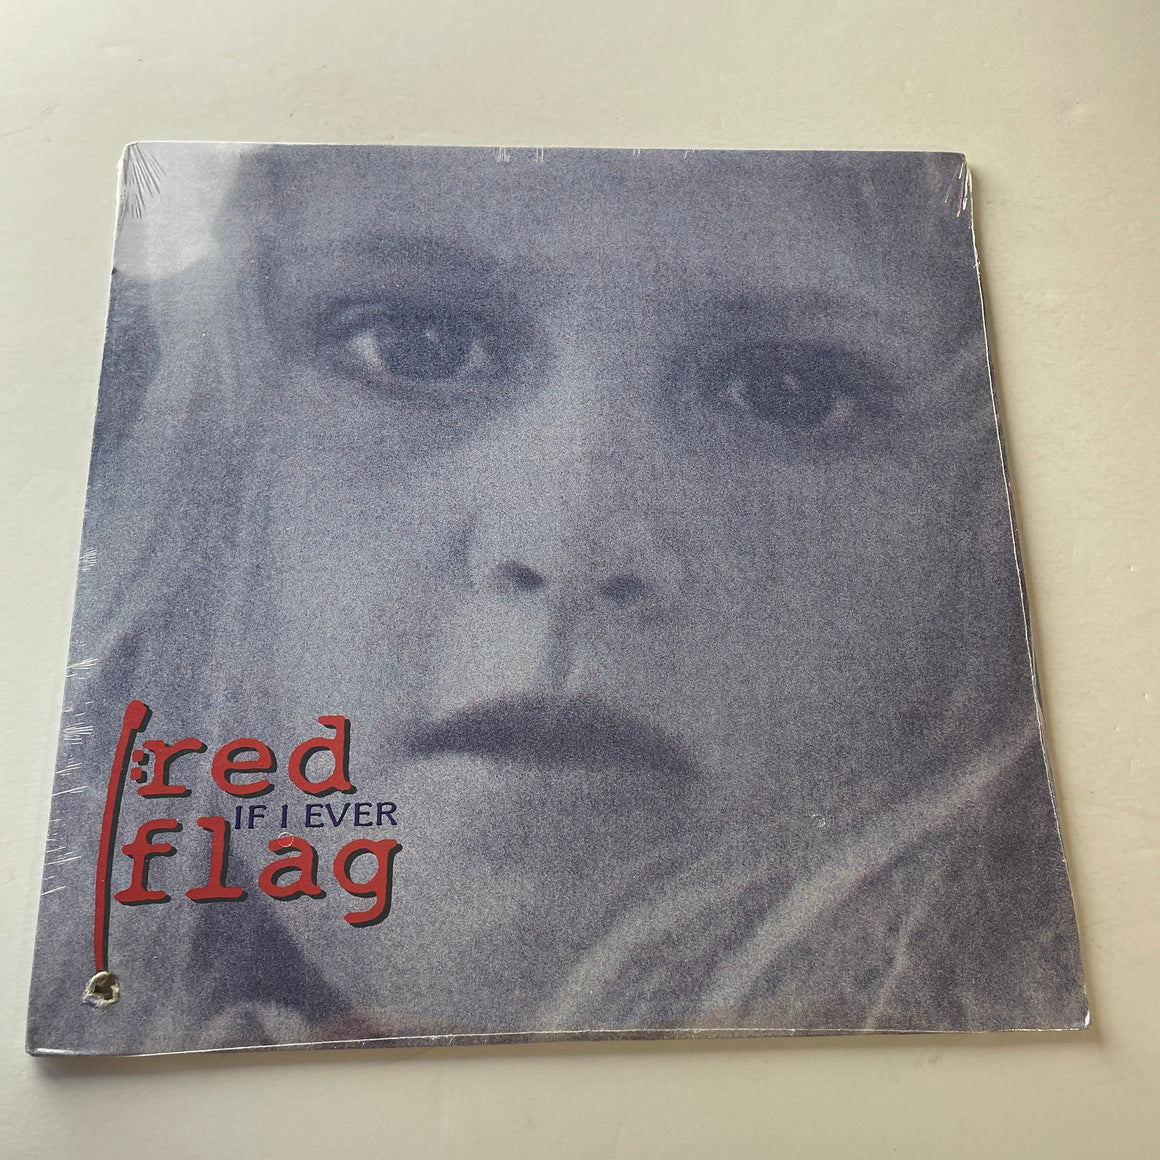 Red Flag If I Ever 12" 12" Used Vinyl Single M\VG+